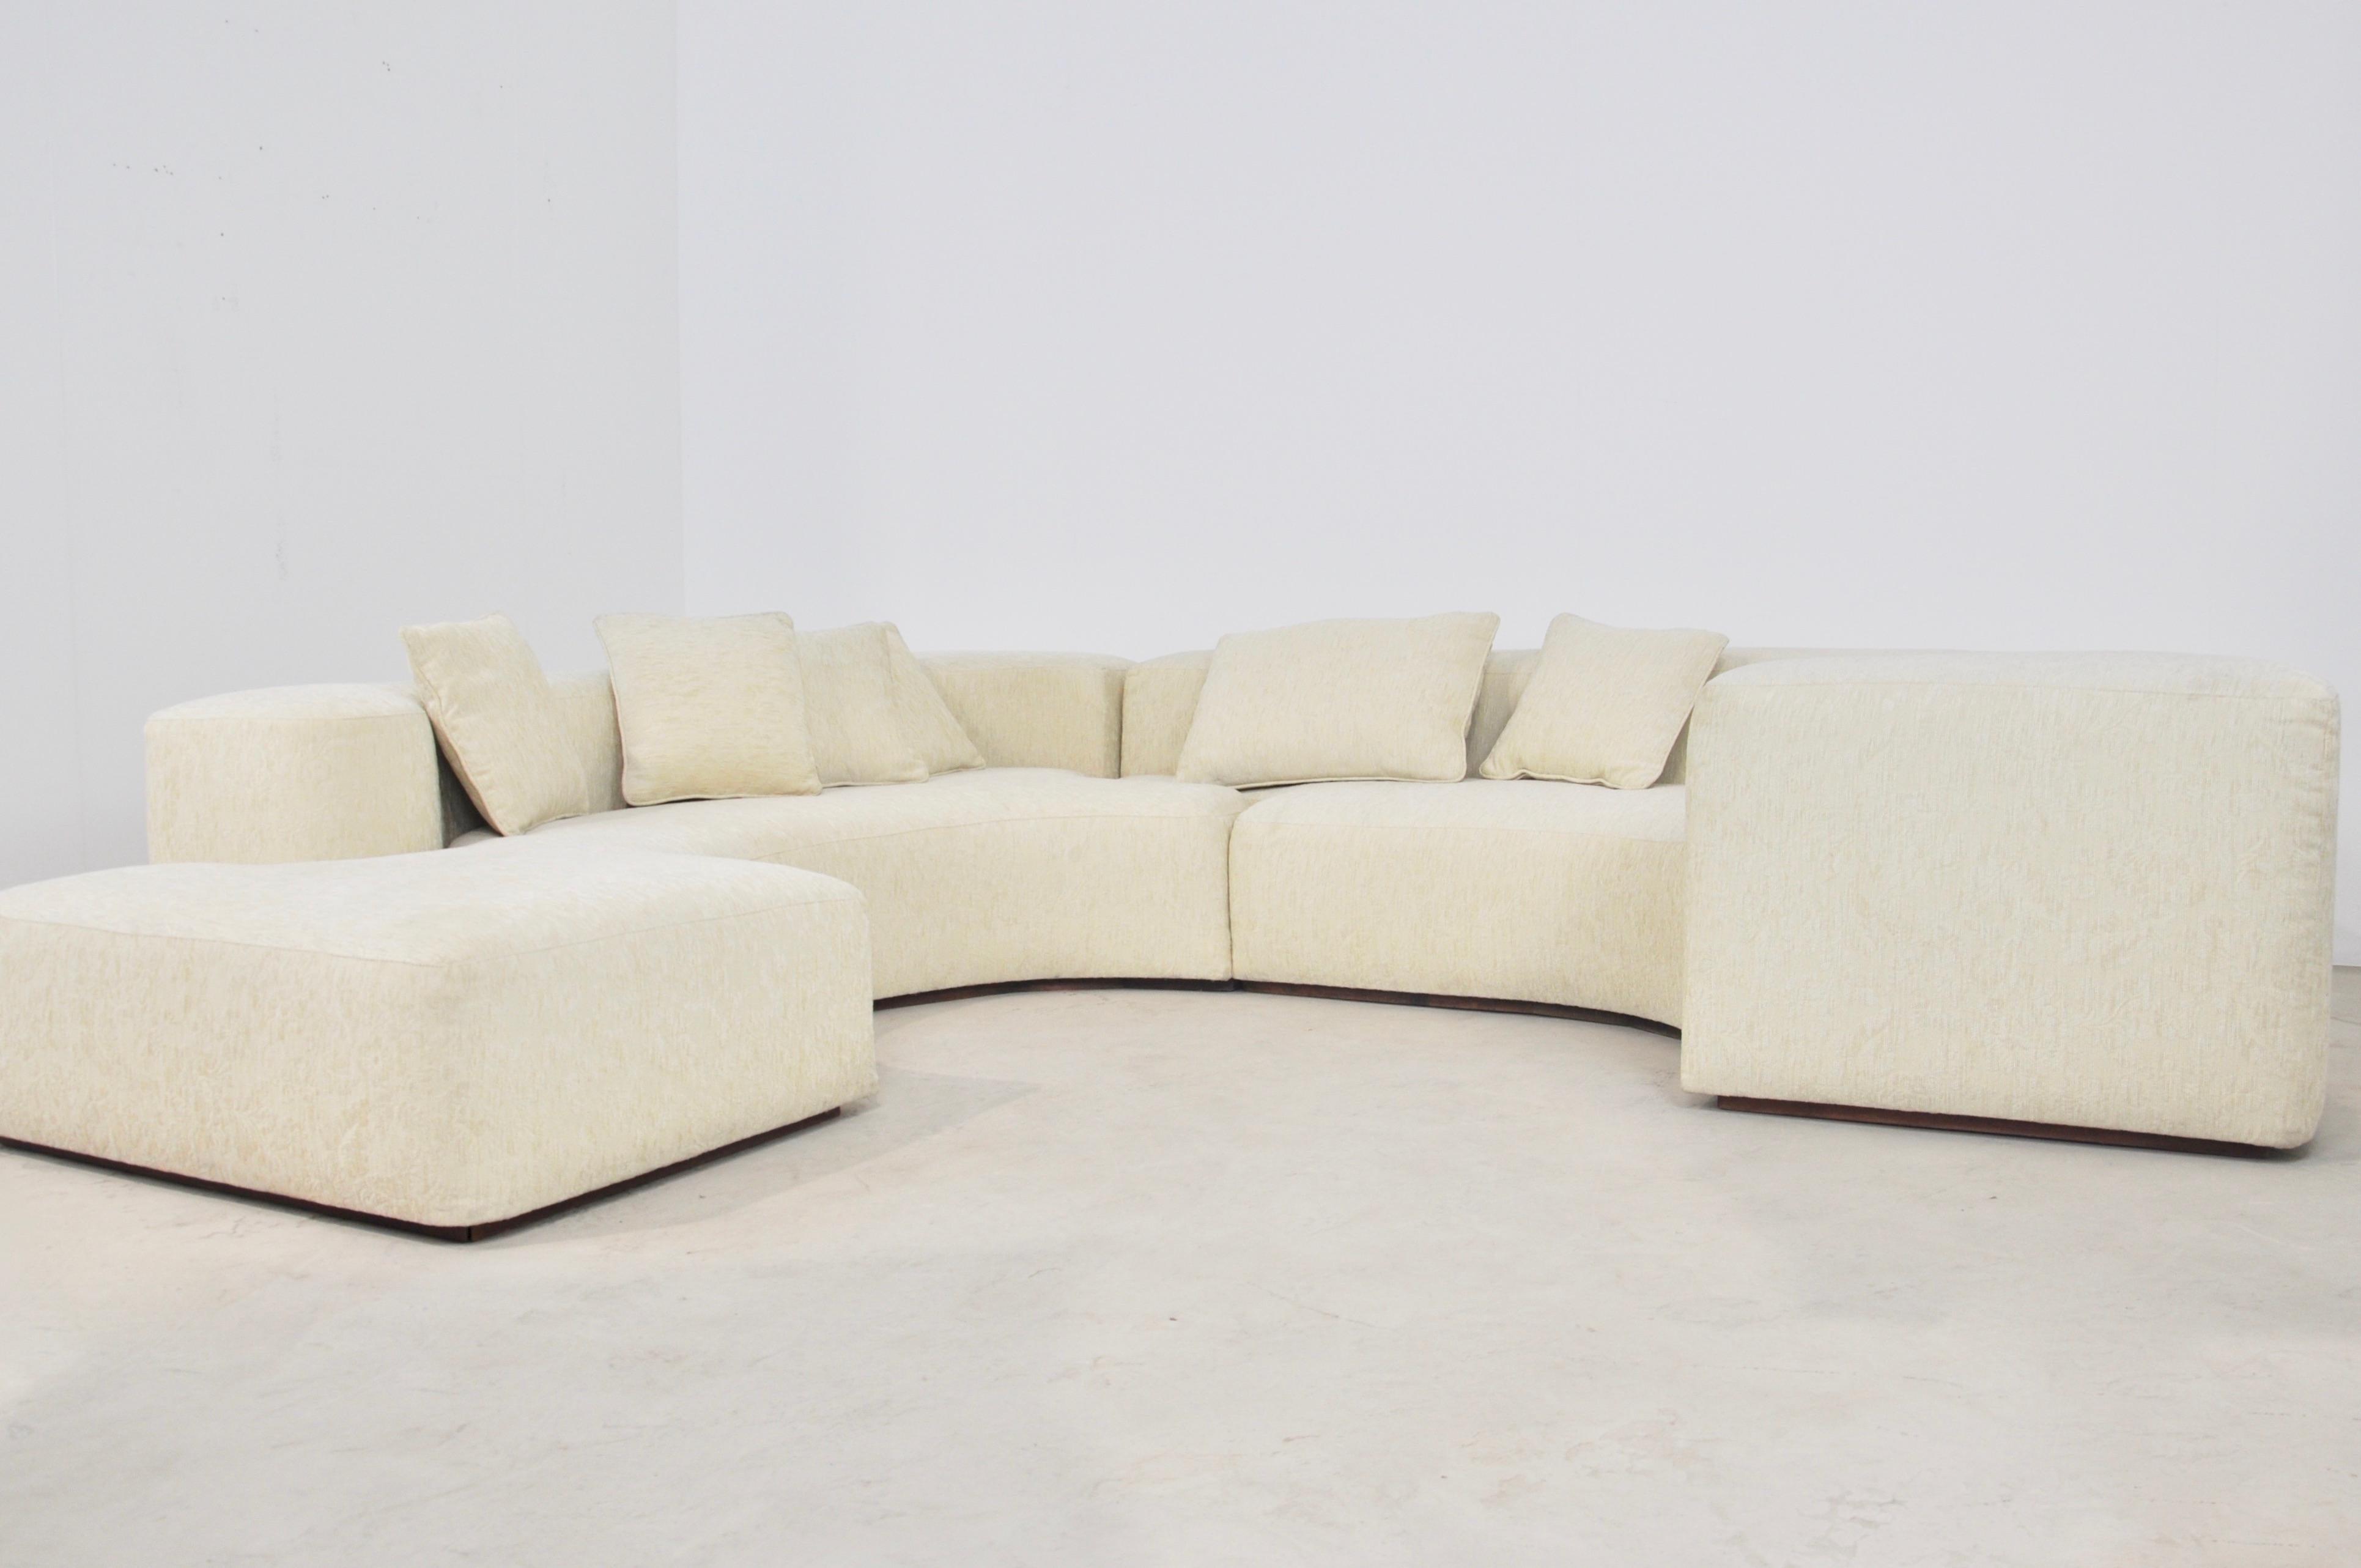 Late 20th Century Ennio Chiggio, Environ One Sofa by Nikol International, 1970s